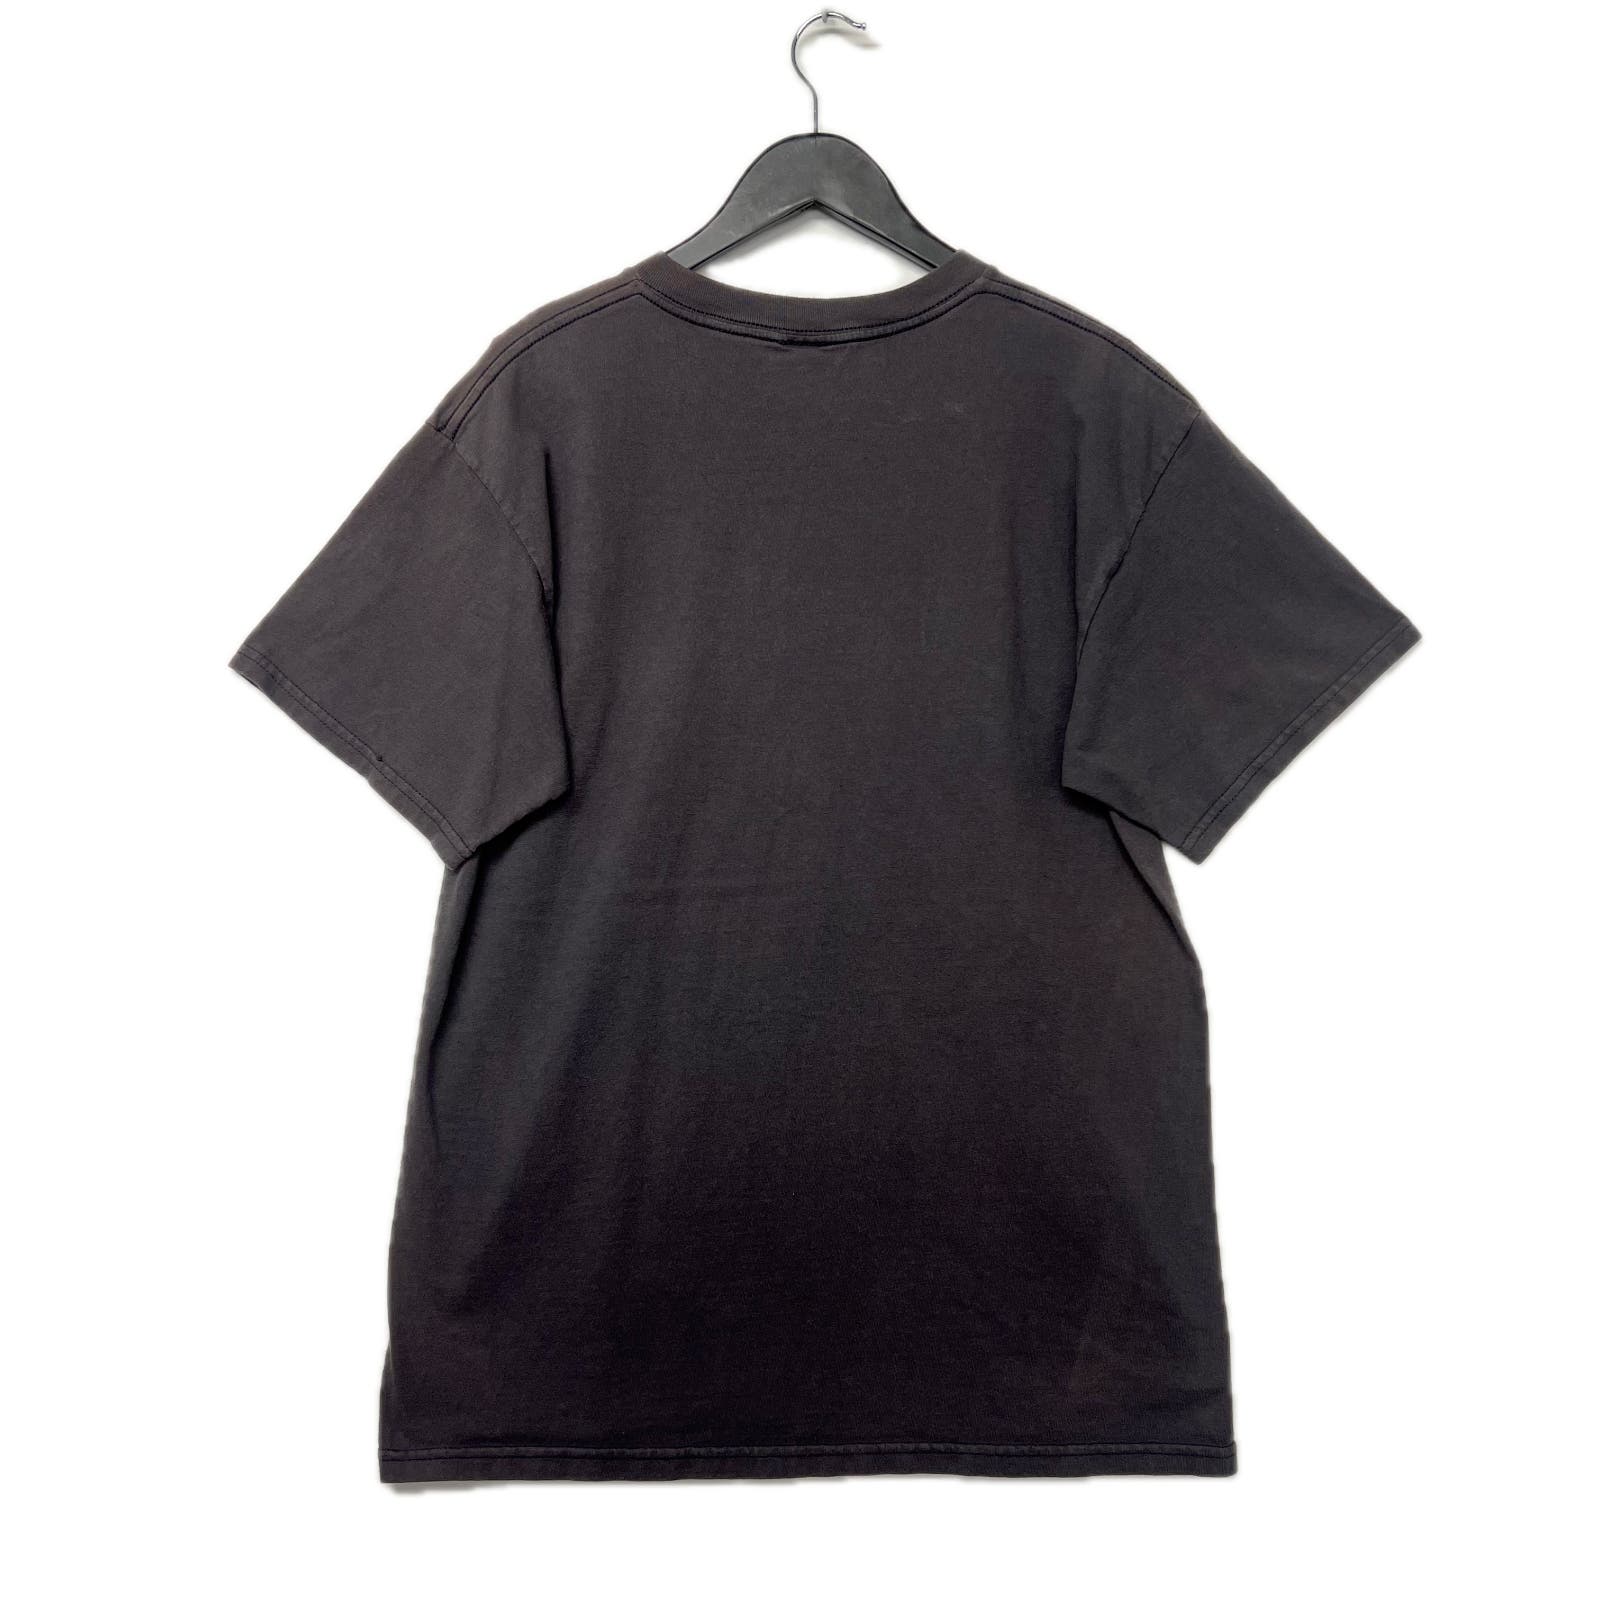 1999 Korn Gray T-shirt Size L